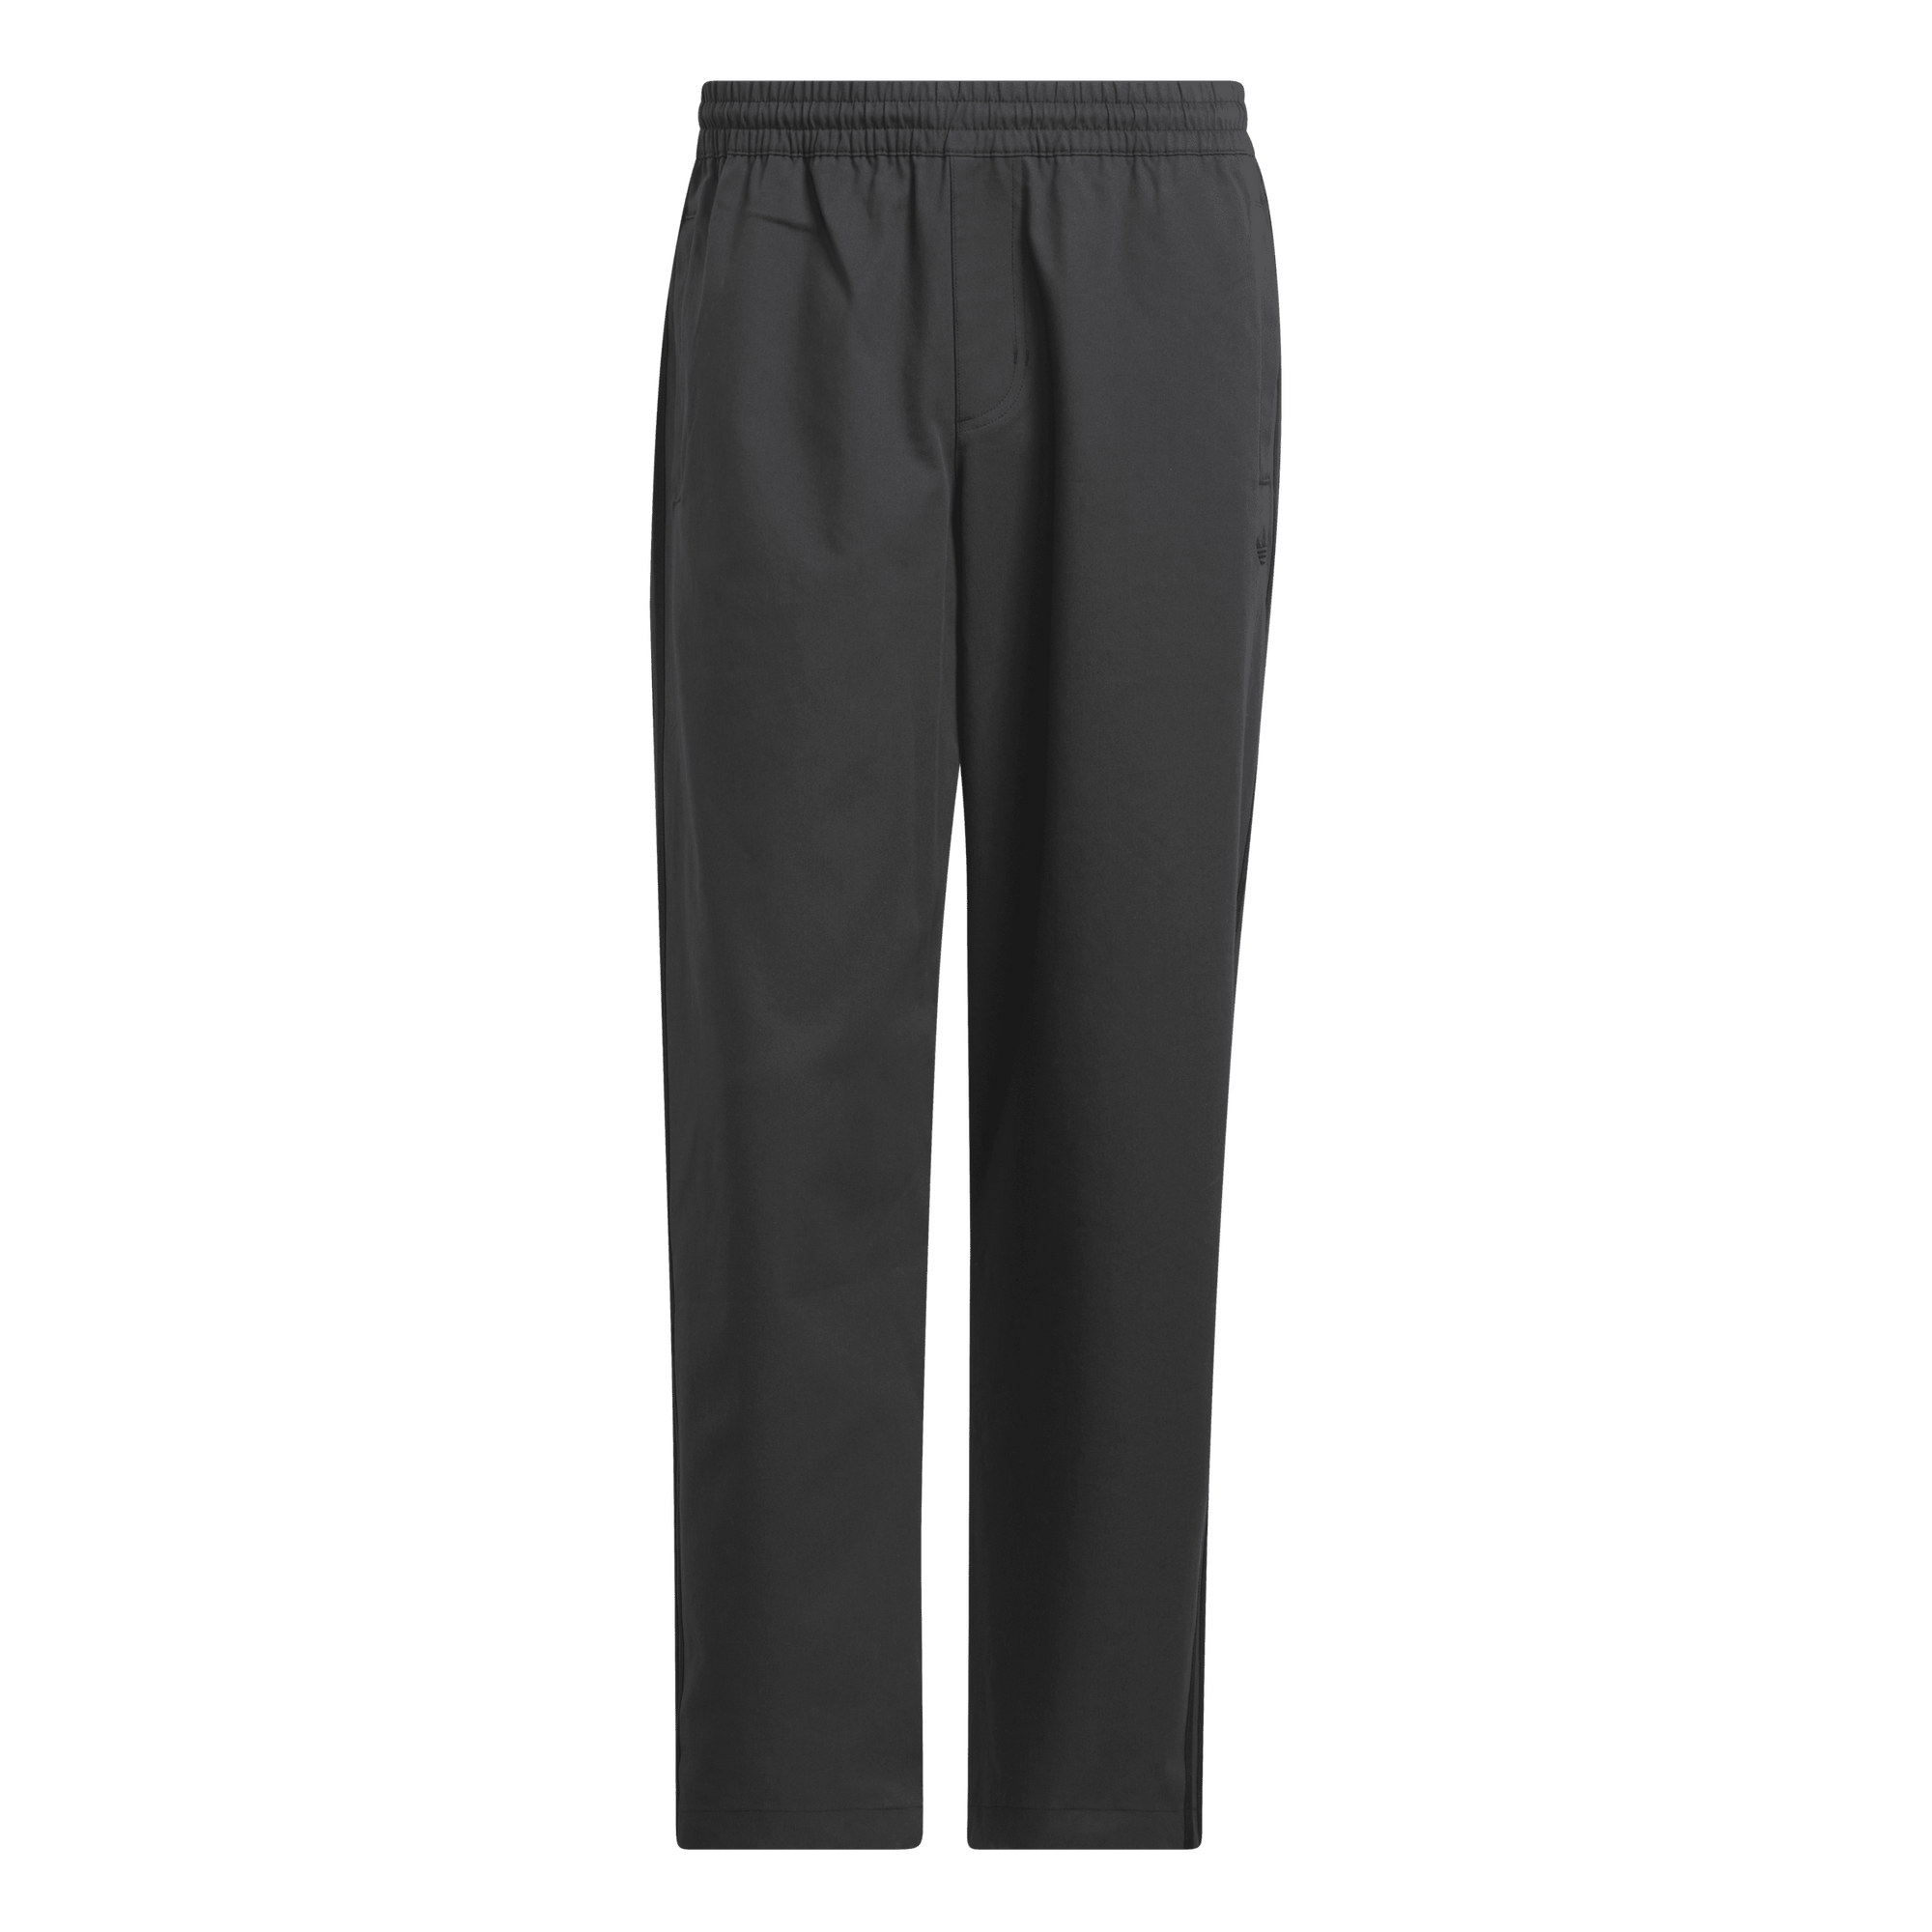 ADIDAS Superfire Track Pants Carbon/Black Men's Pants Adidas 